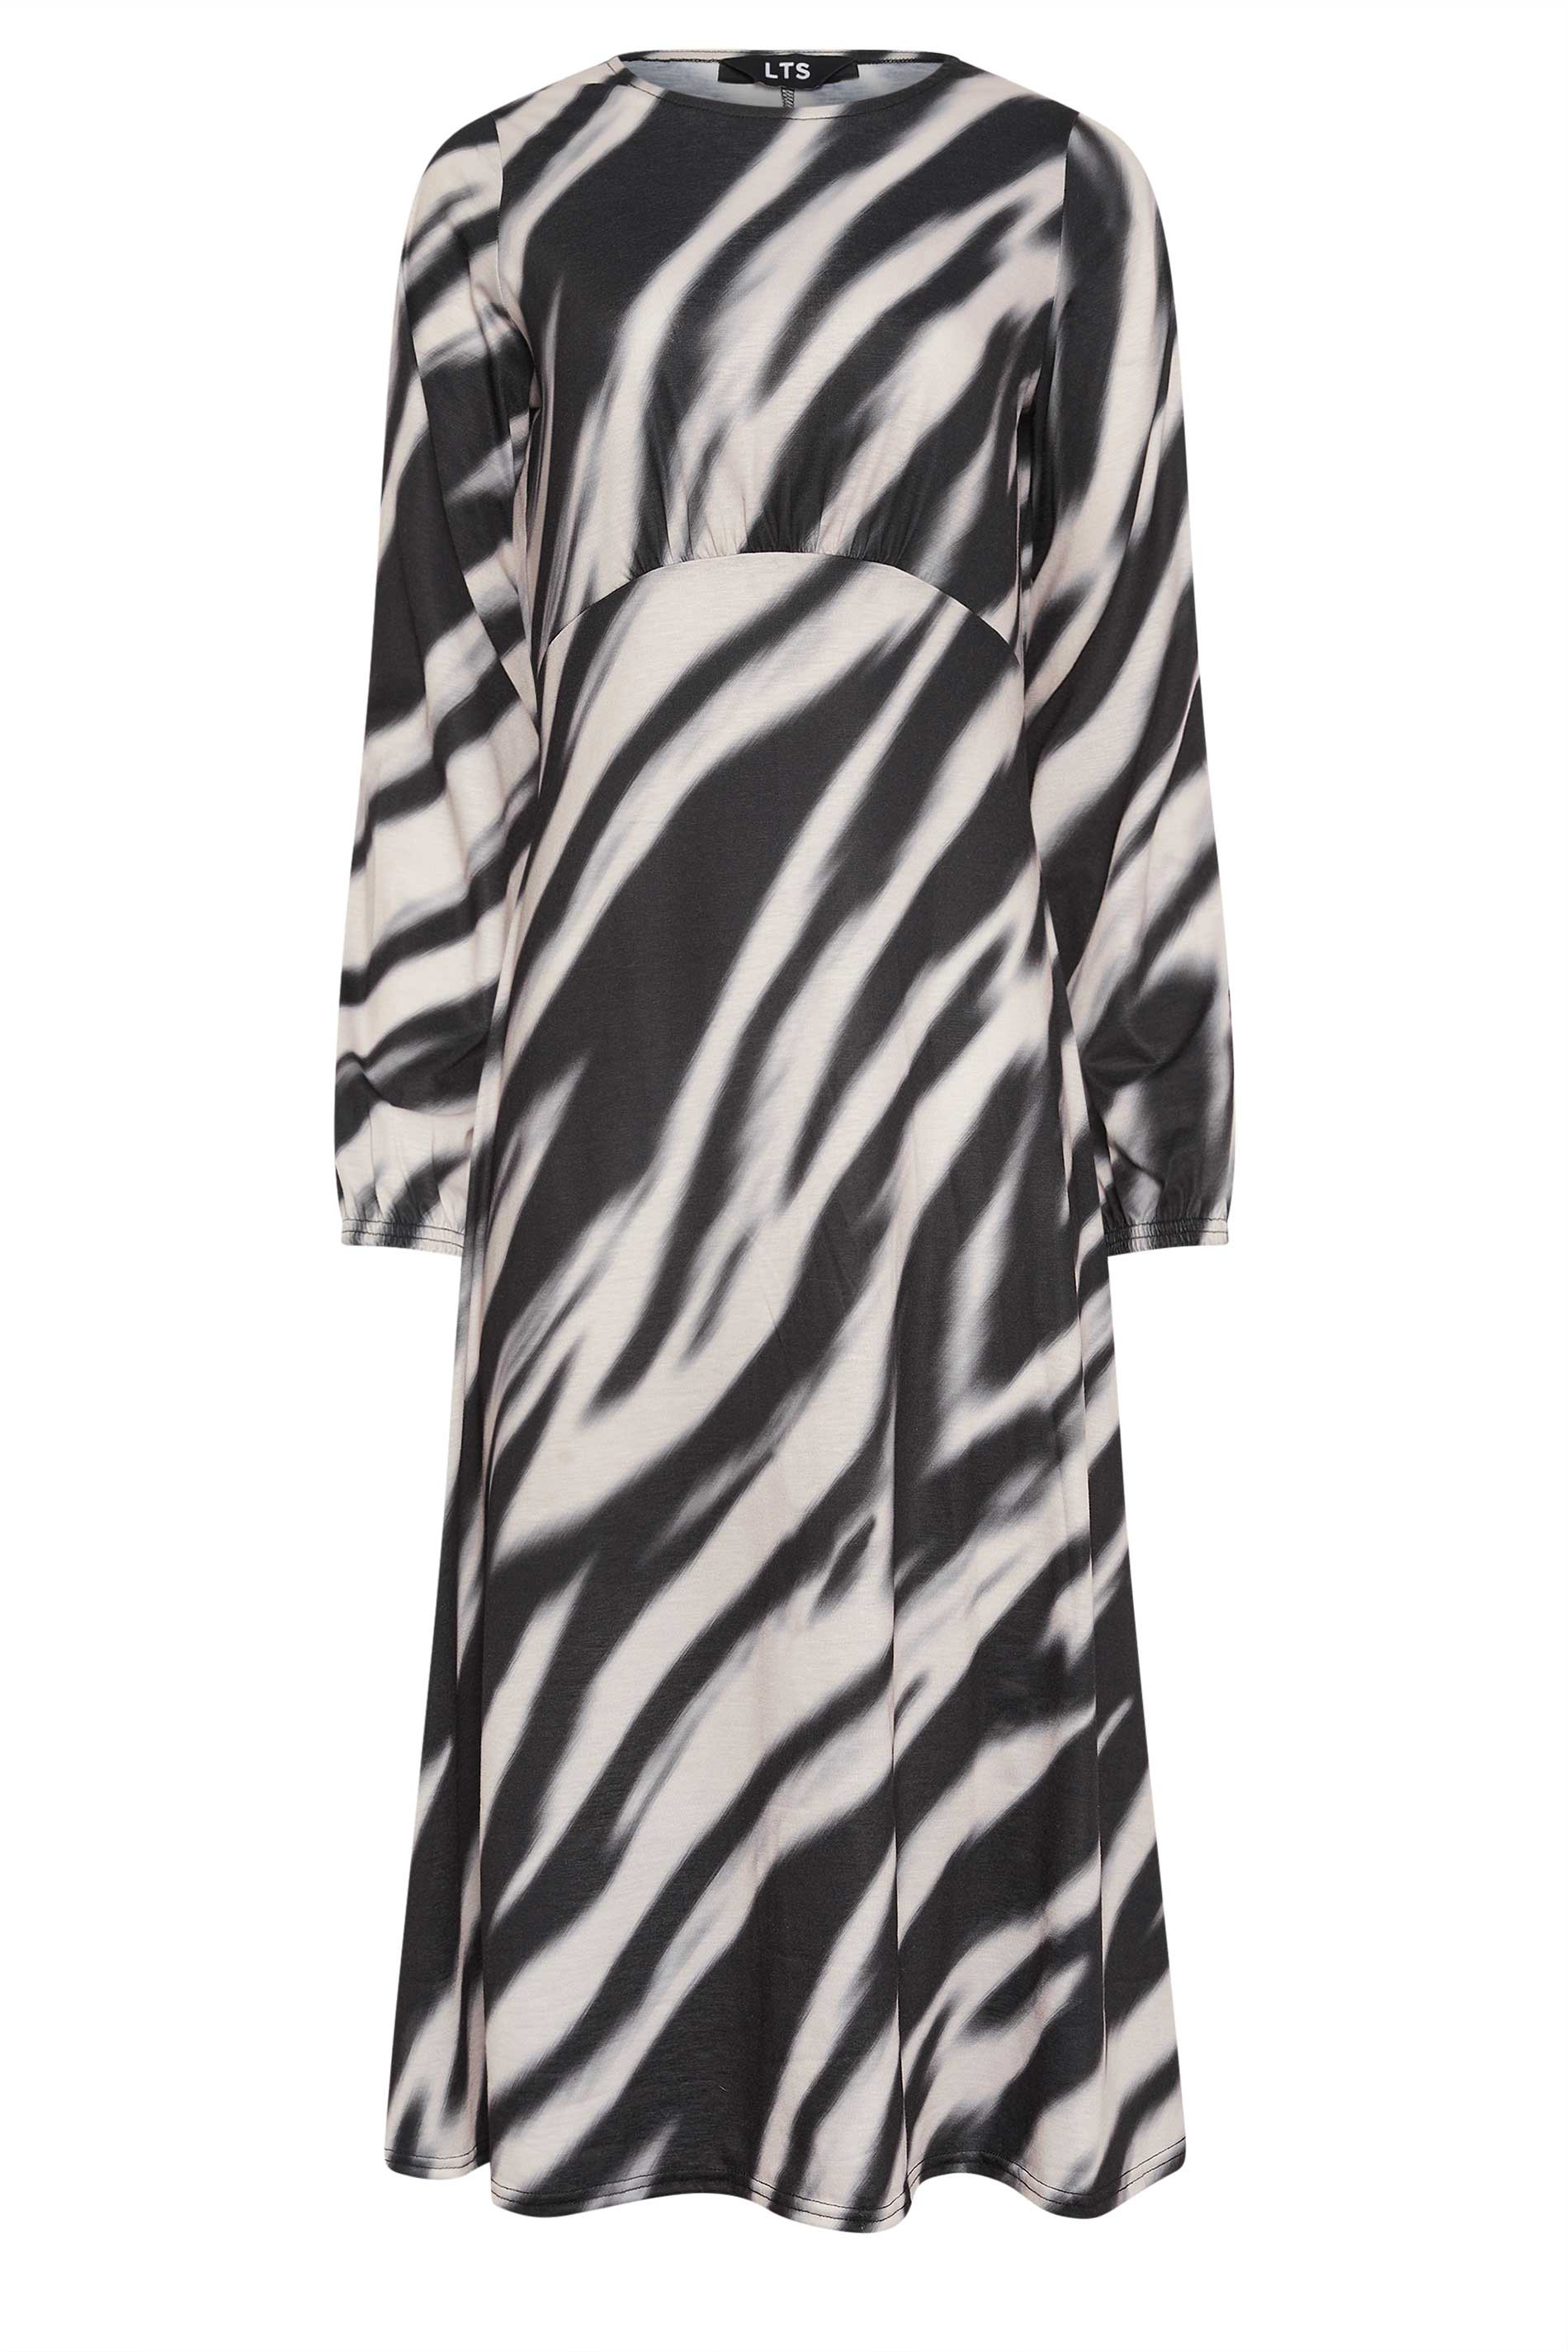 LTS Tall Women's Black Abstract Stripe Print Tea Dress | Long Tall Sally